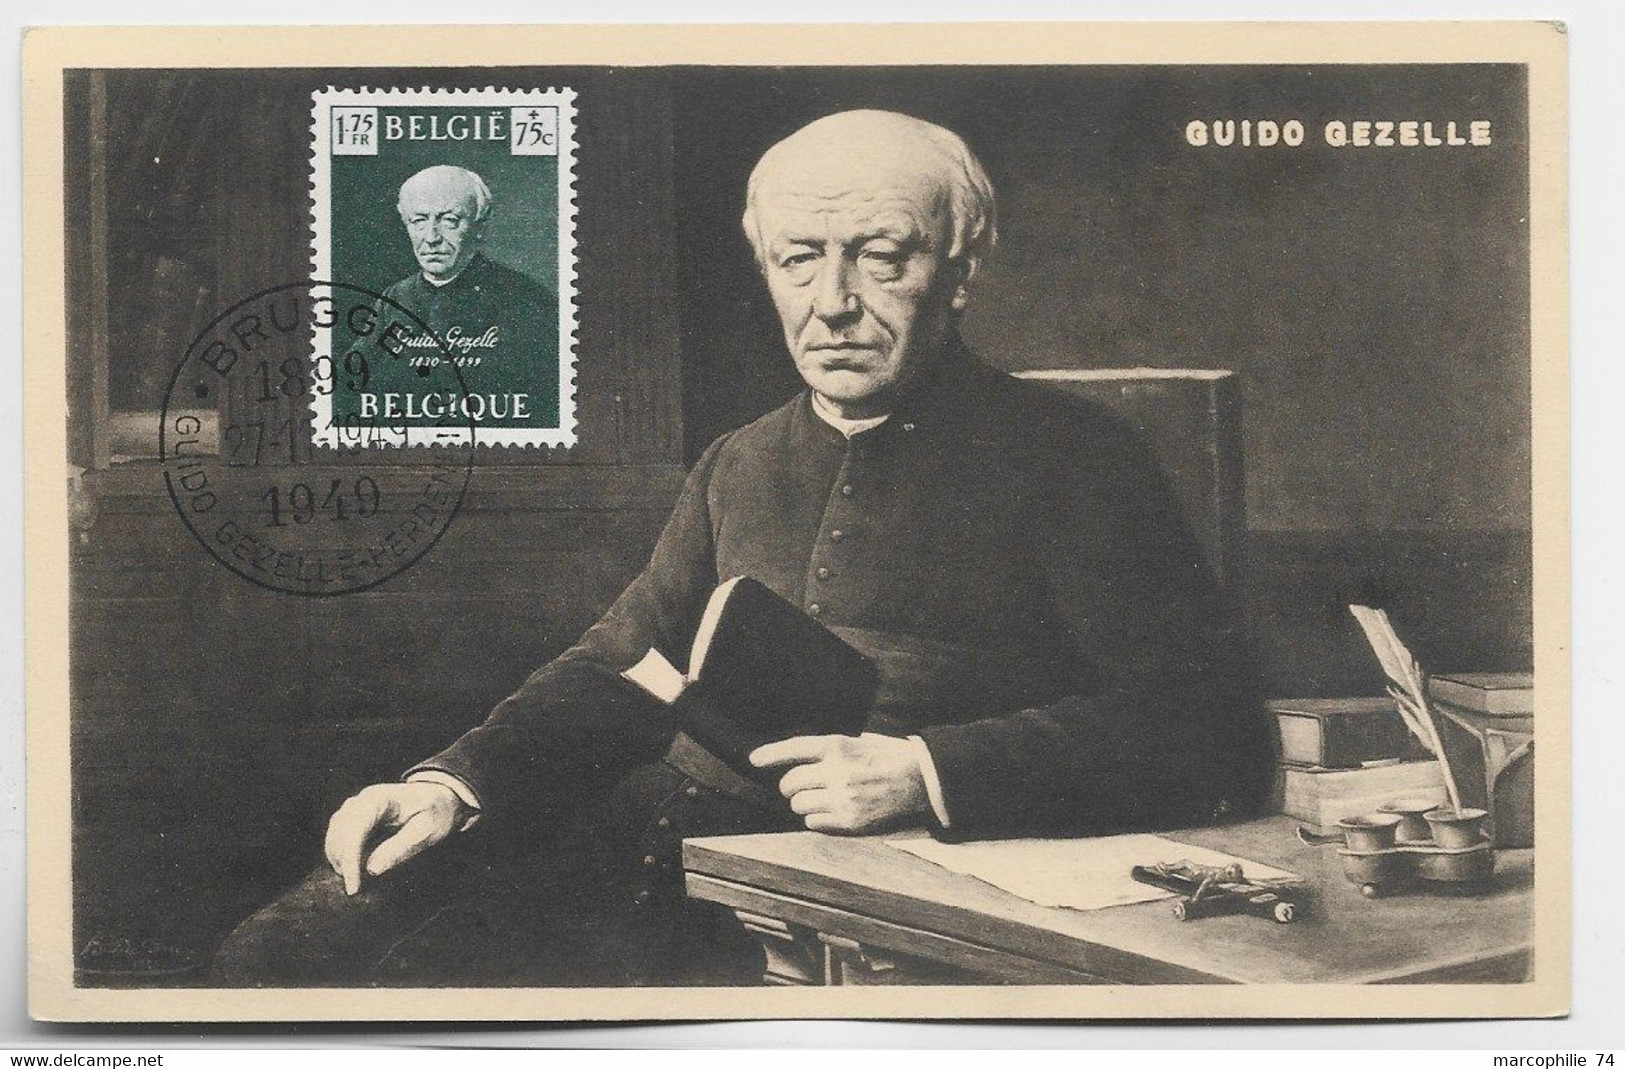 BELGIQUE 1FR75 GUIDO GEZELLE CARTE CARD MAXIMUM BRUGGE 1949 - 1934-1951